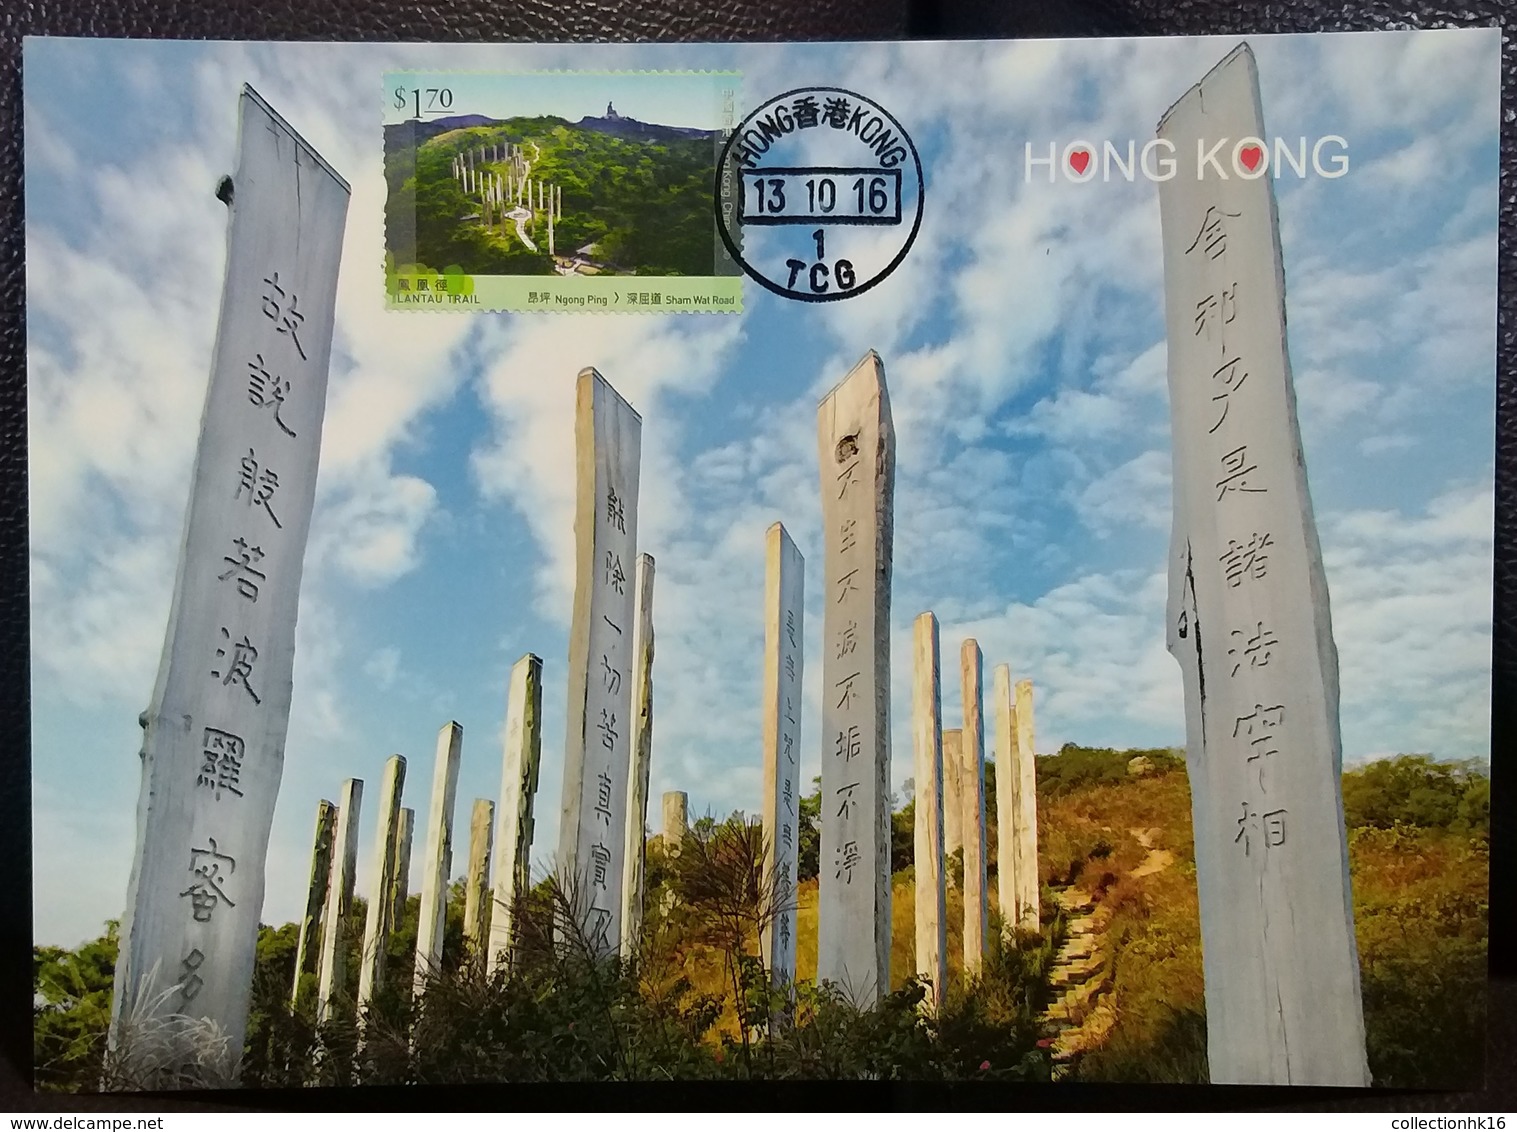 HK Hiking Trails Series No. 1: Lantau Trail Wisdom Path JAO Tsung-i 2016 Hong Kong Maximum Card MC (Location Postmark) - Maximumkaarten